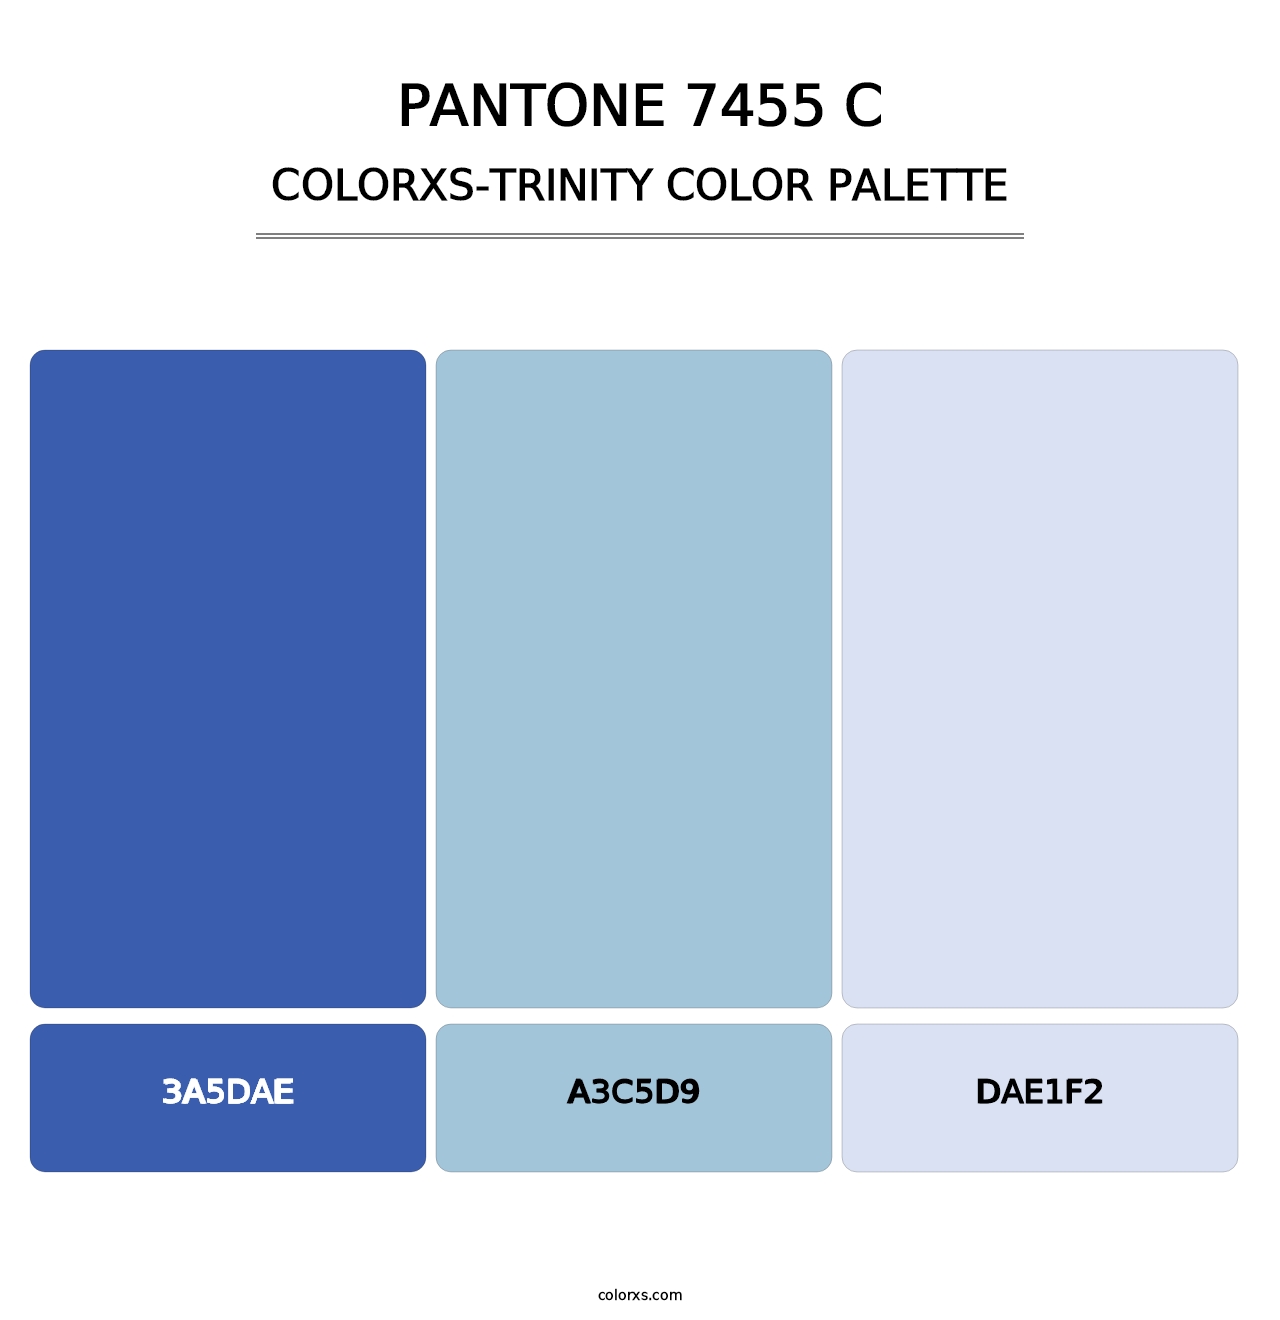 PANTONE 7455 C - Colorxs Trinity Palette